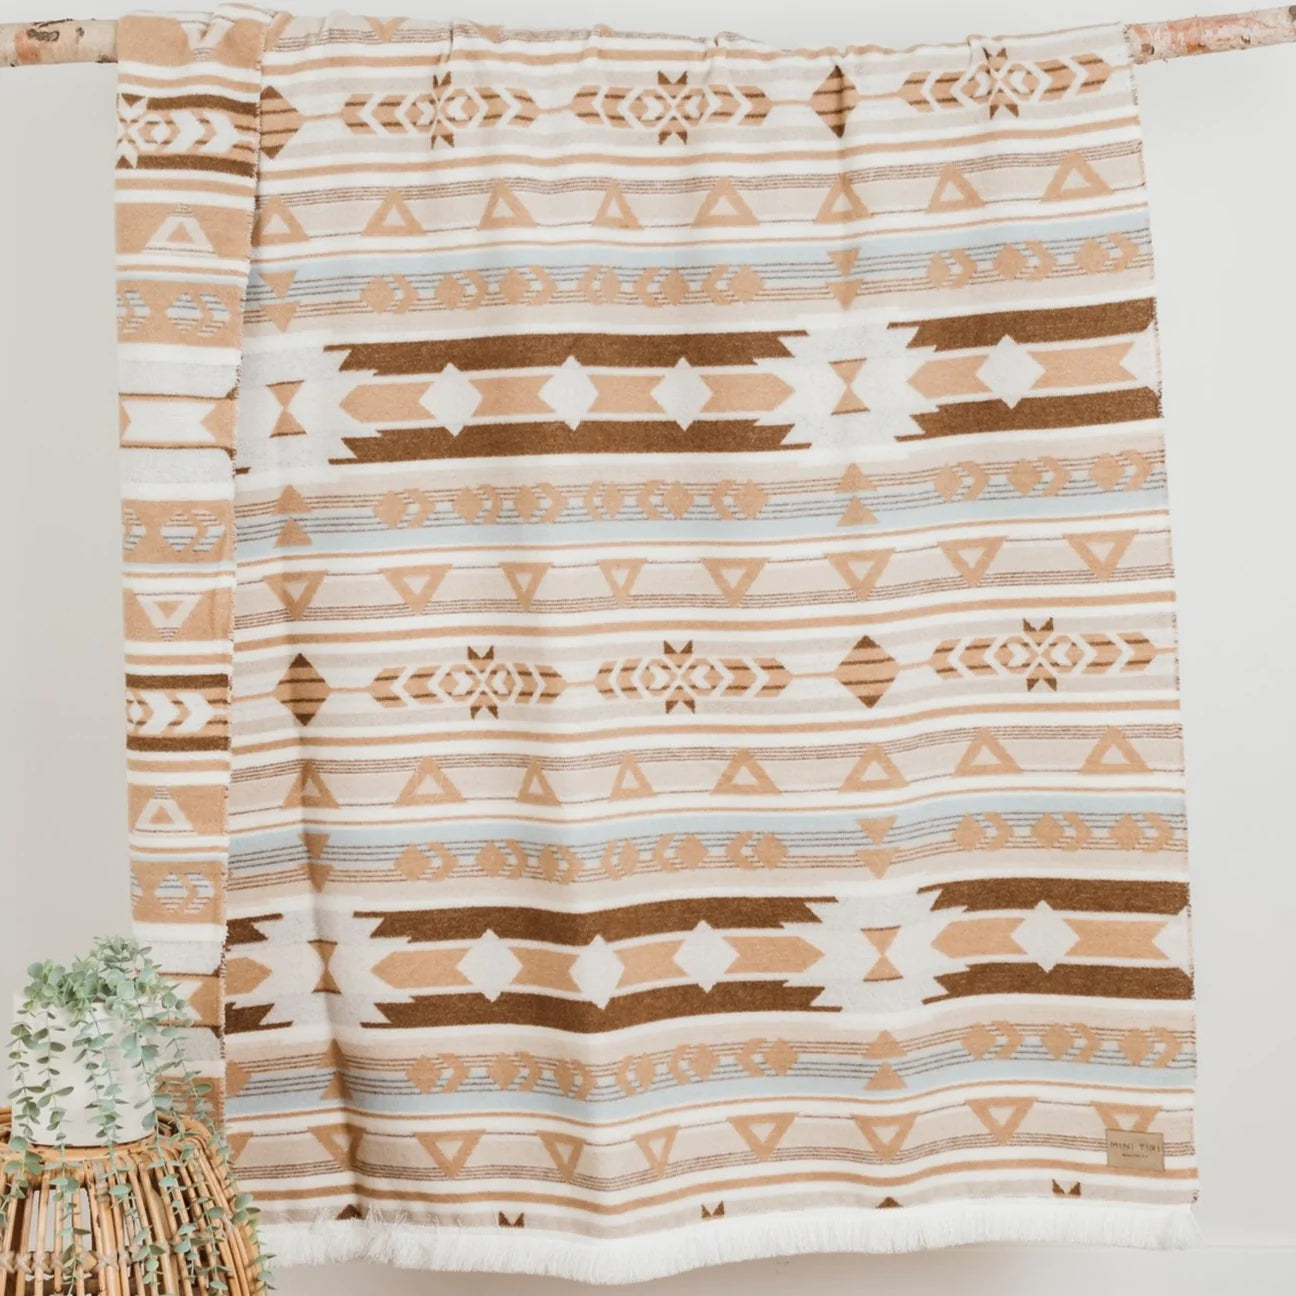 Blanket - Wool Blend - Eco-friendly - Sand - Reversible